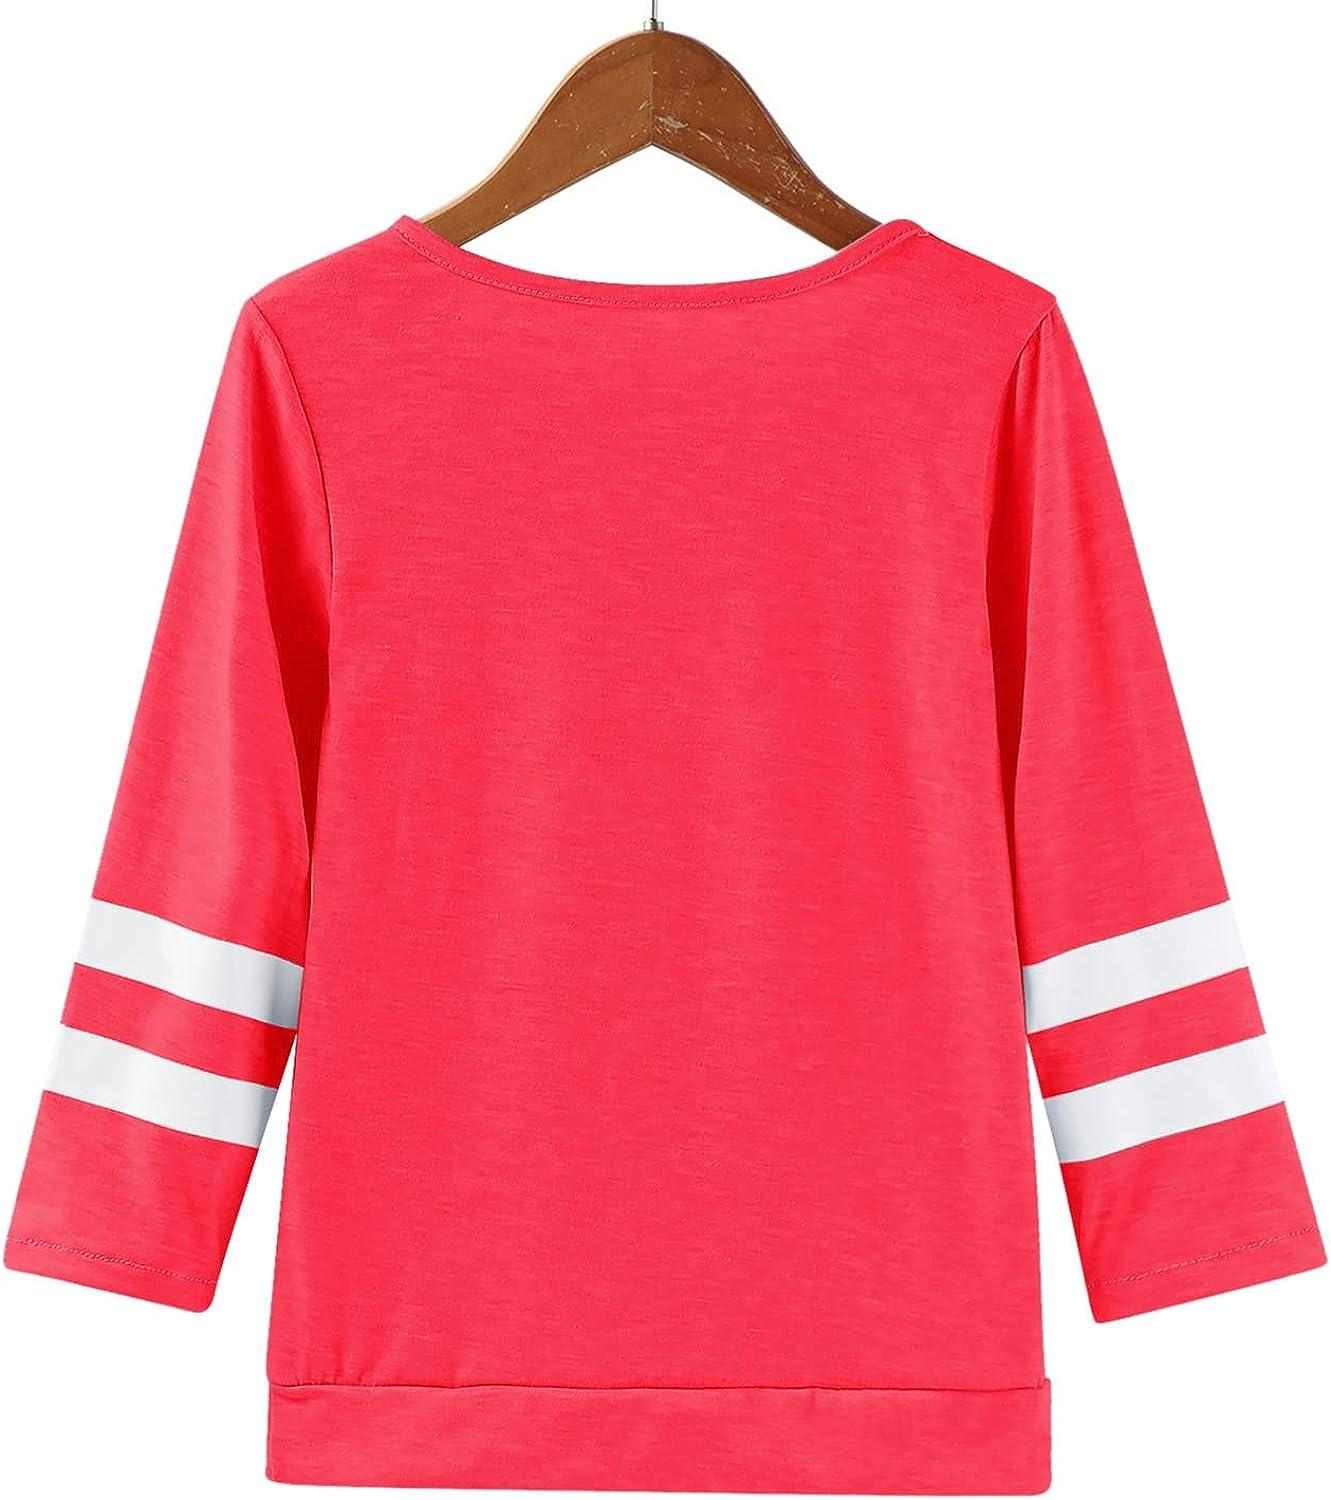 Teen Girls Pullover Hoodies with Crewneck Girls' Casual Loose Top Shirts  Long Sleeve Blouse Sweatshirt Outwear